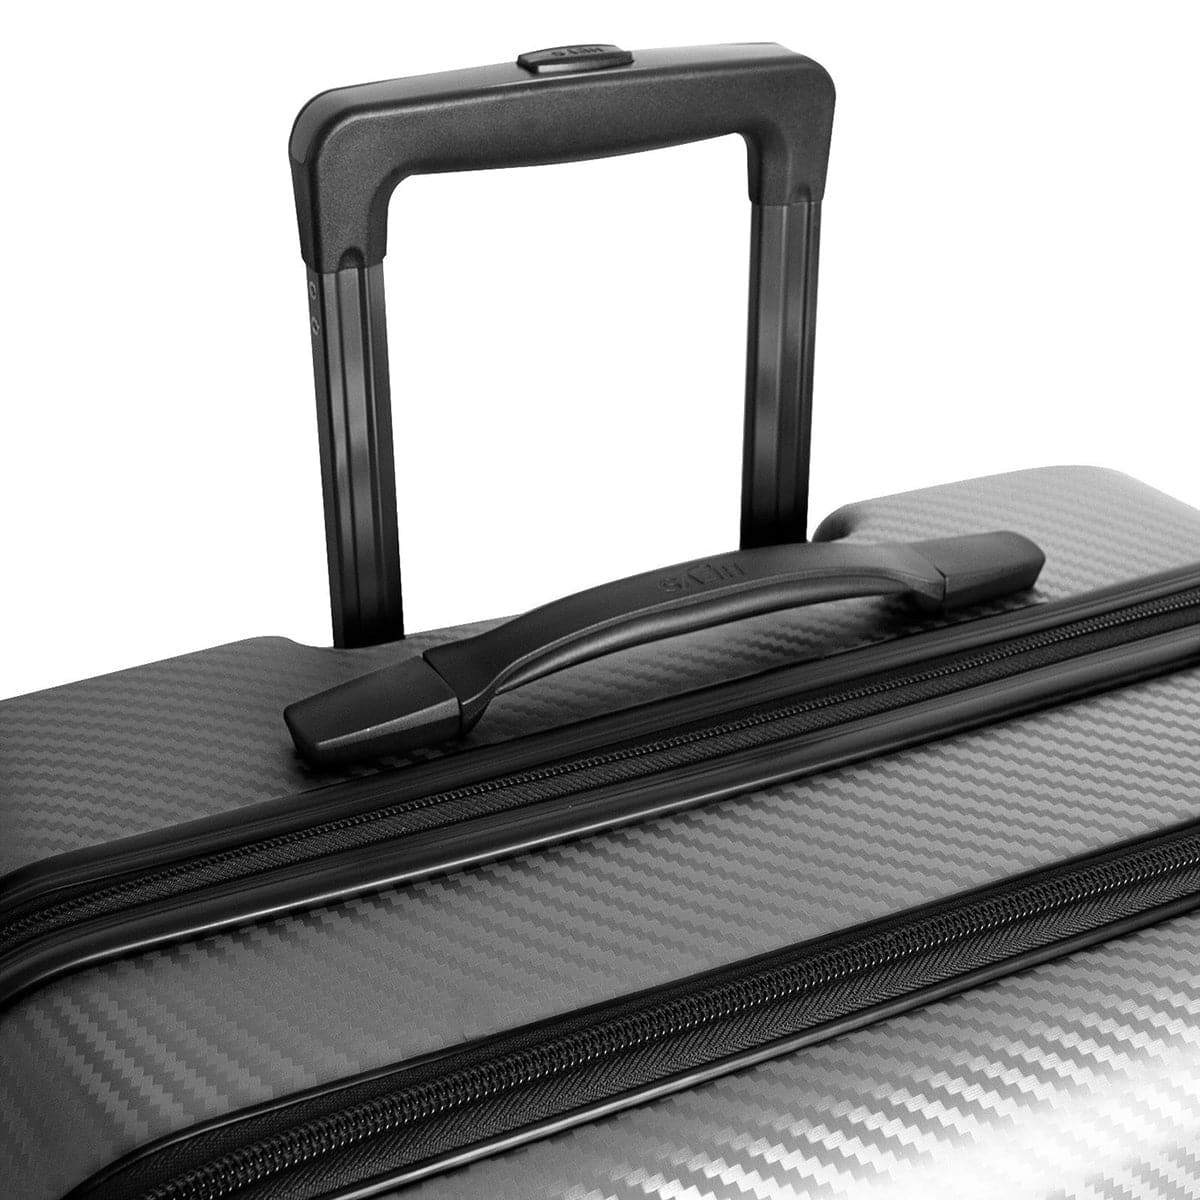 Heys EZ Access 2.0 26" Spinner Luggage